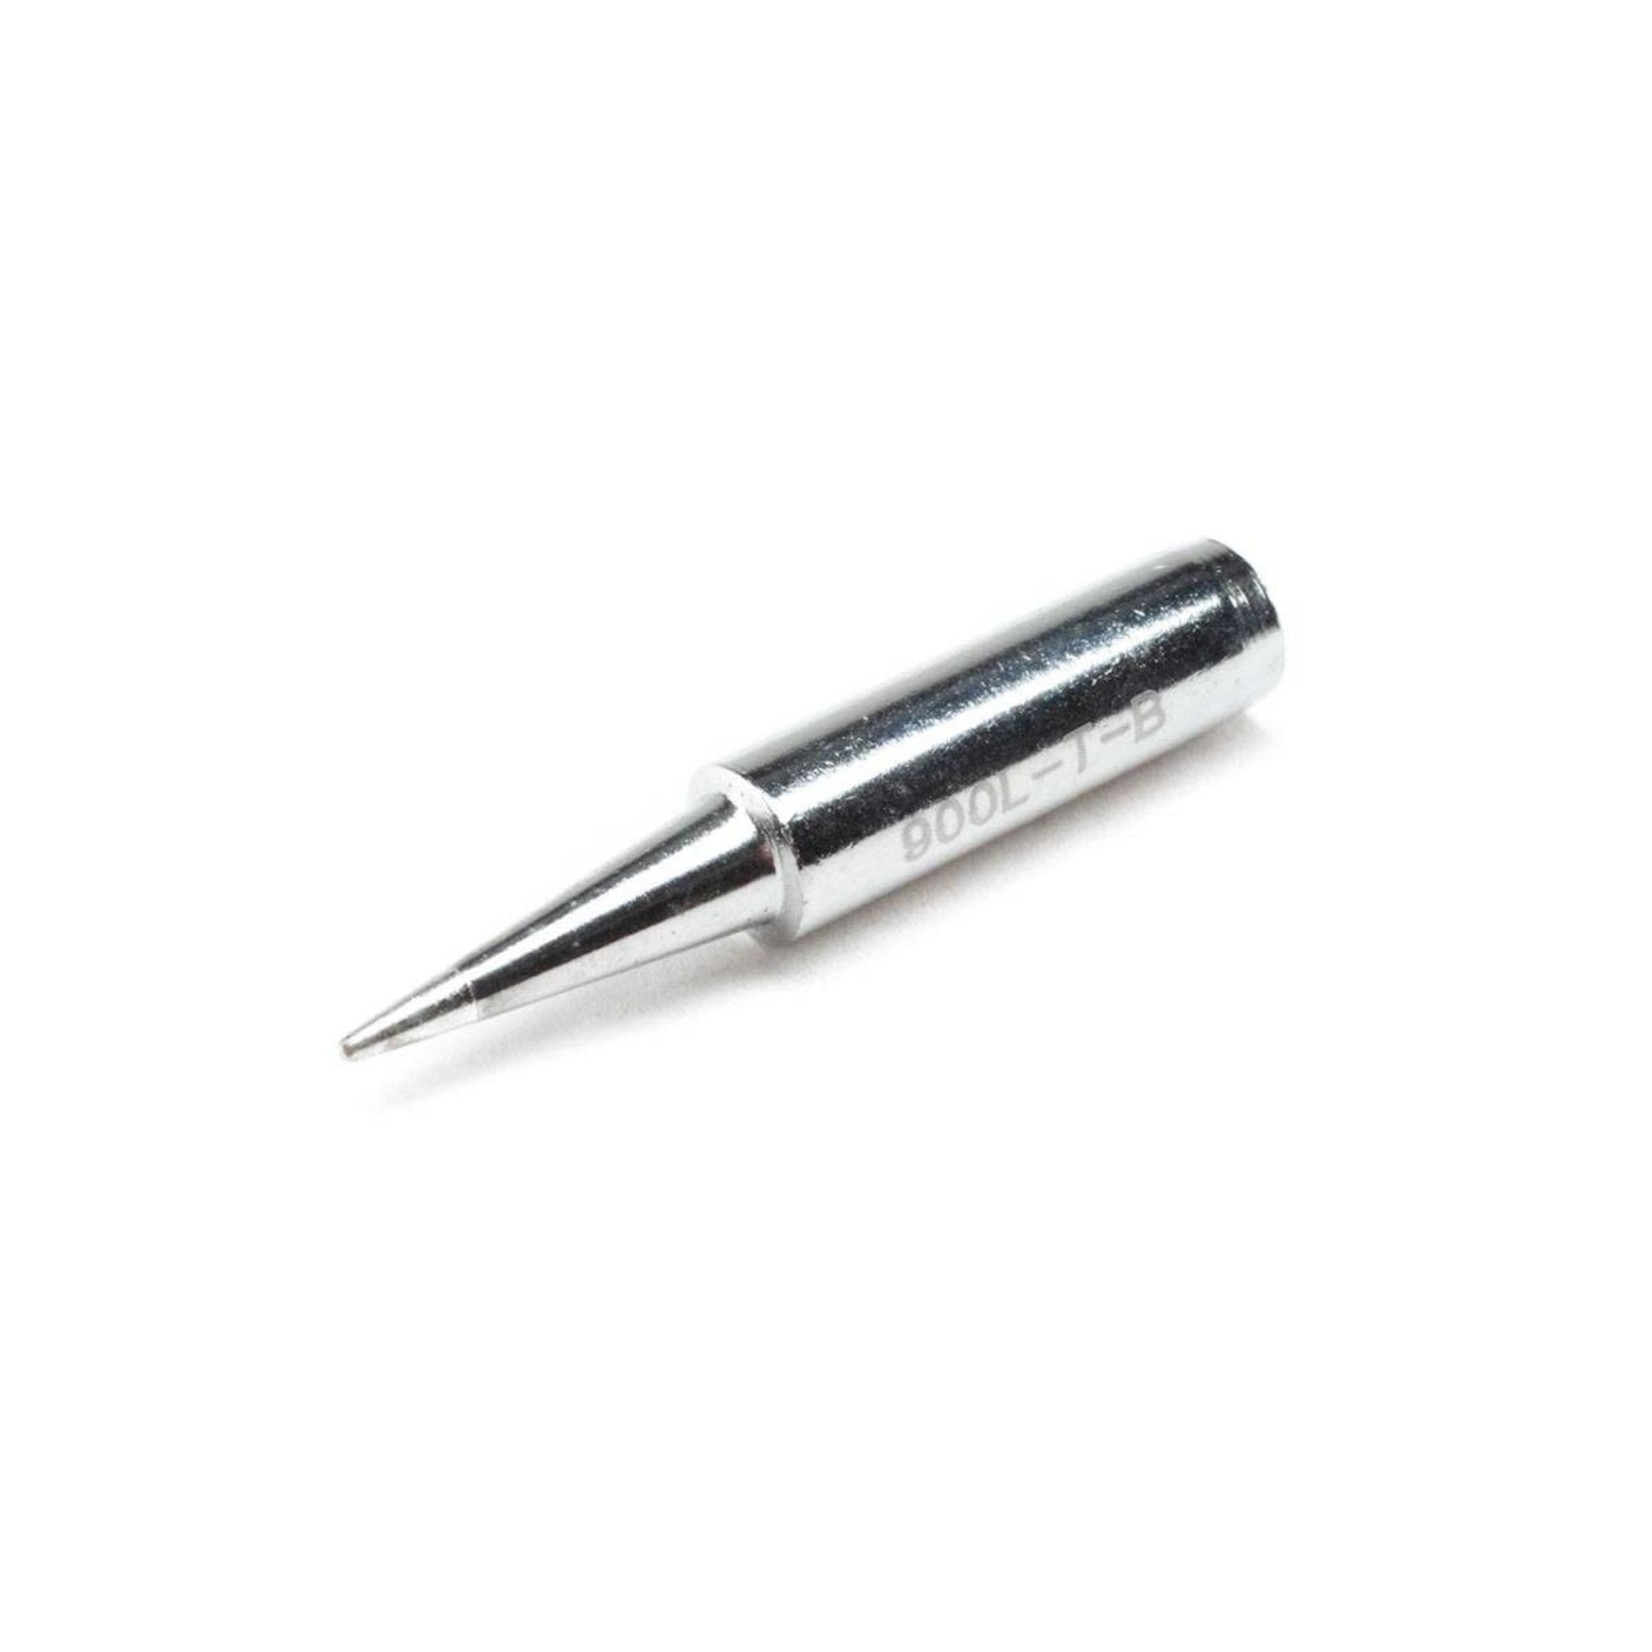 Duratrax DuraTrax TrakPower 1.0mm Pencil Tip for TK950 Soldering Station #DTXR0970